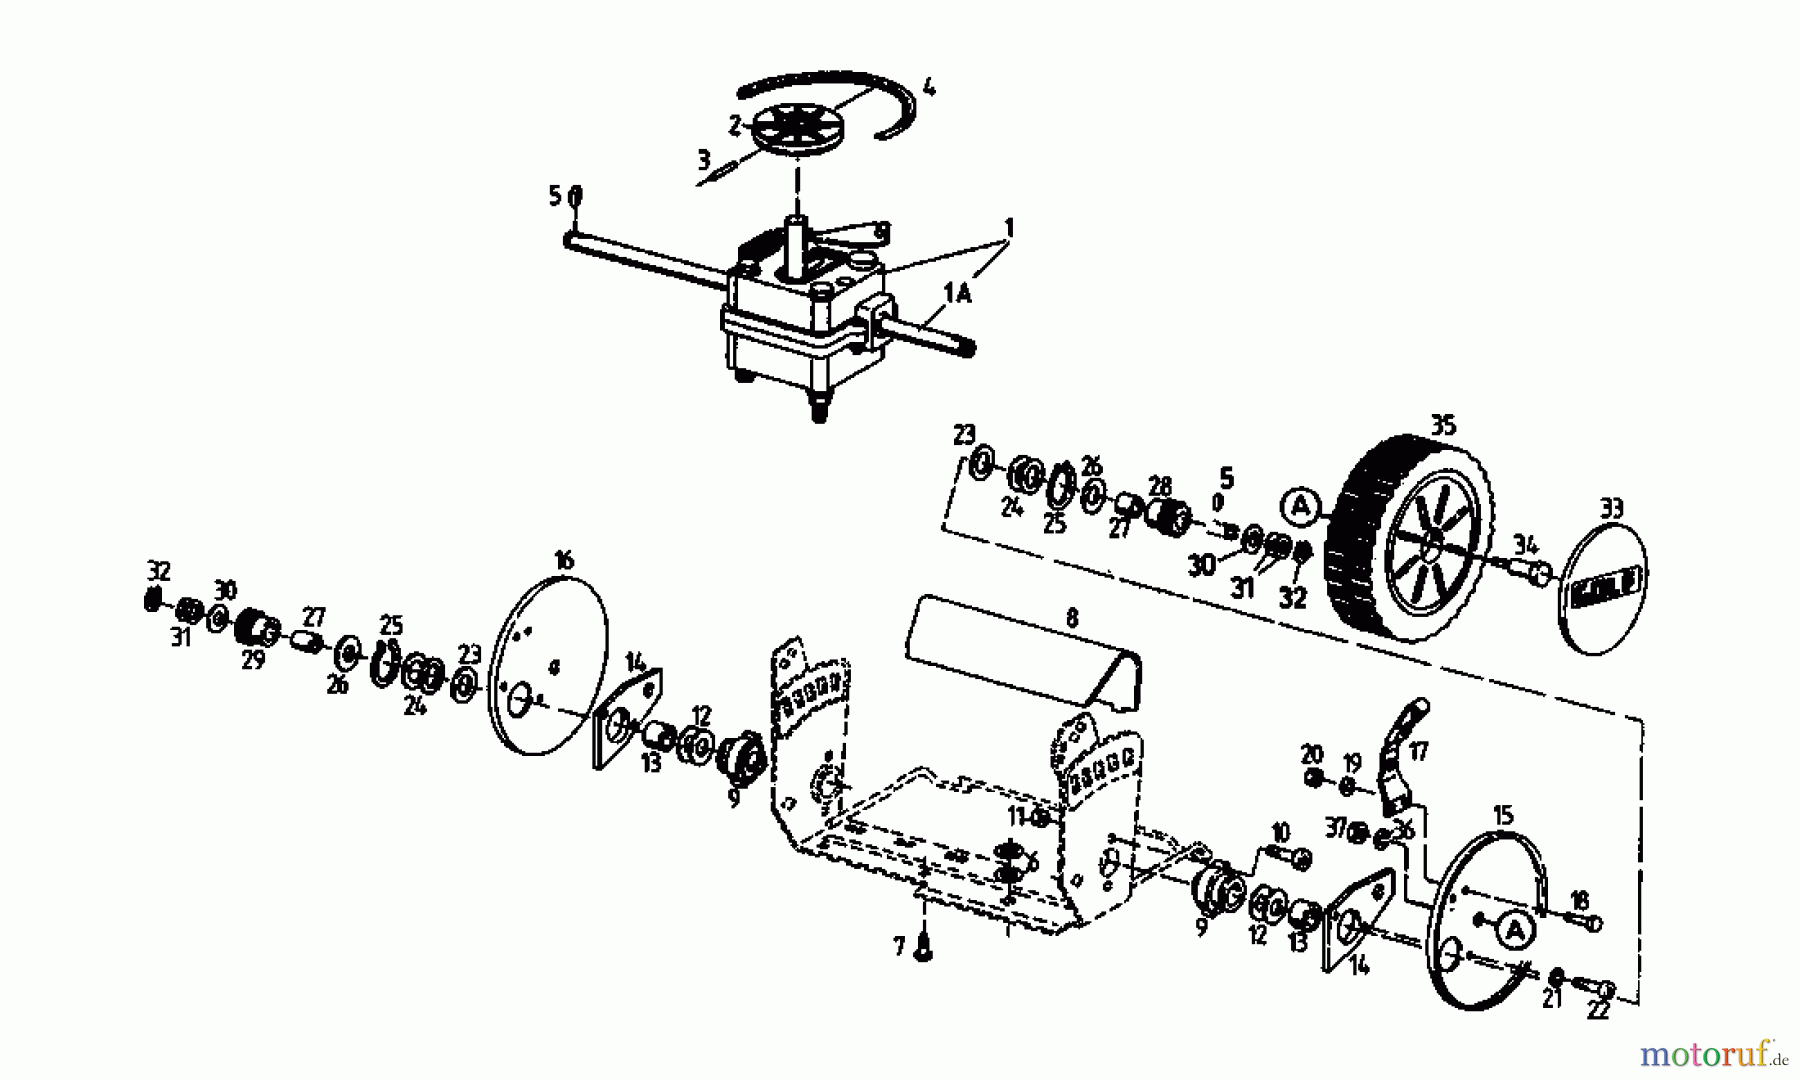  Golf Petrol mower self propelled Golf BRL 04054.04  (1996) Gearbox, Wheels, Cutting hight adjustment